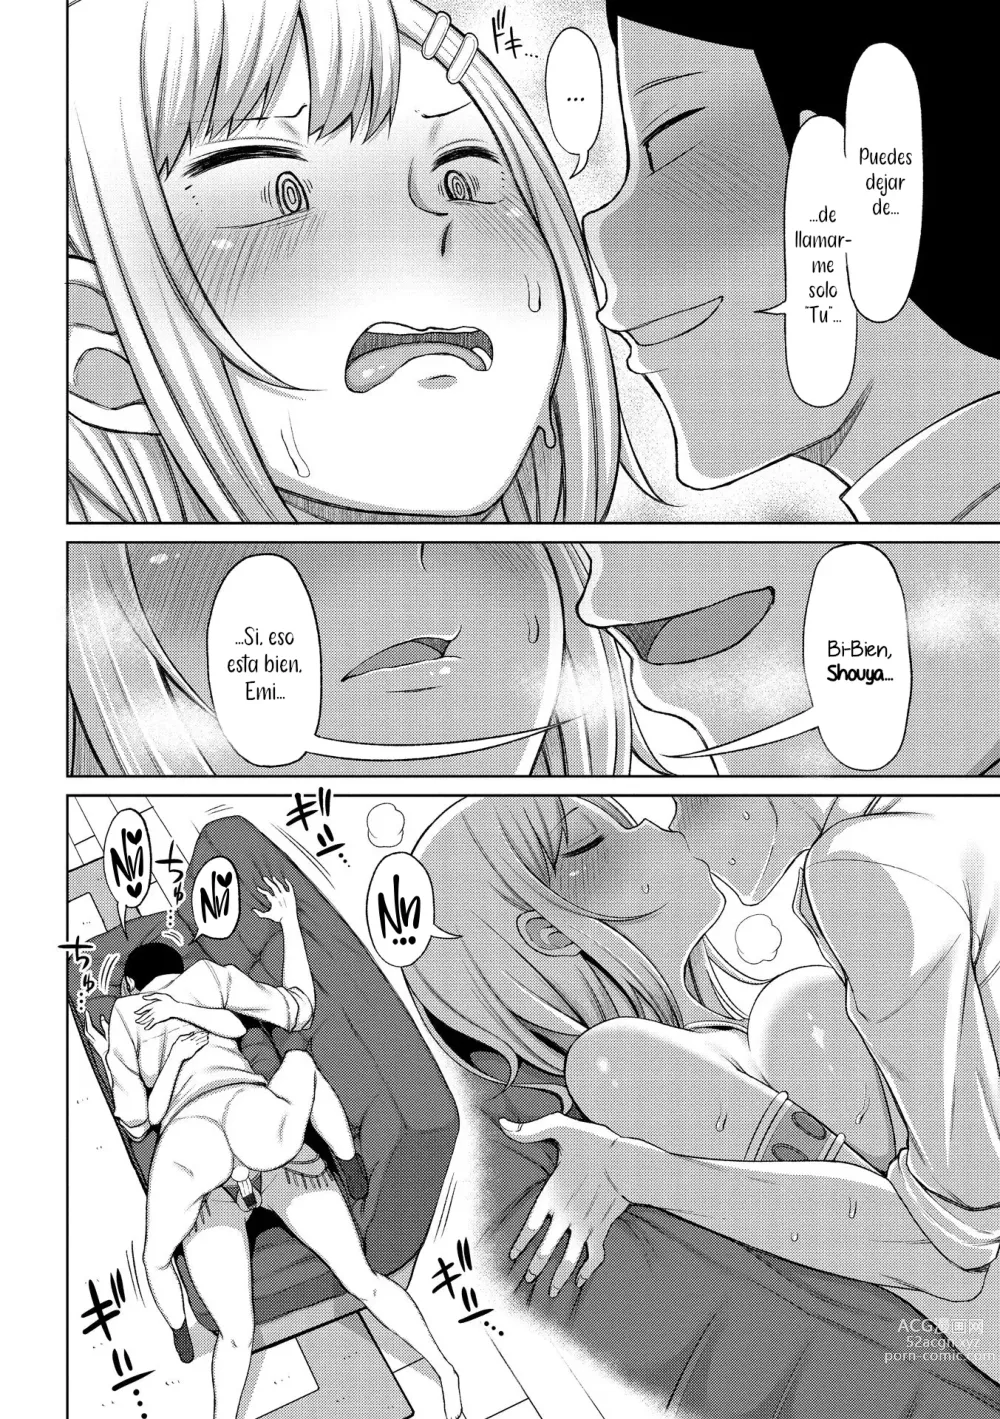 Page 8 of manga Mi esposa no quiere tener sexo conmigo